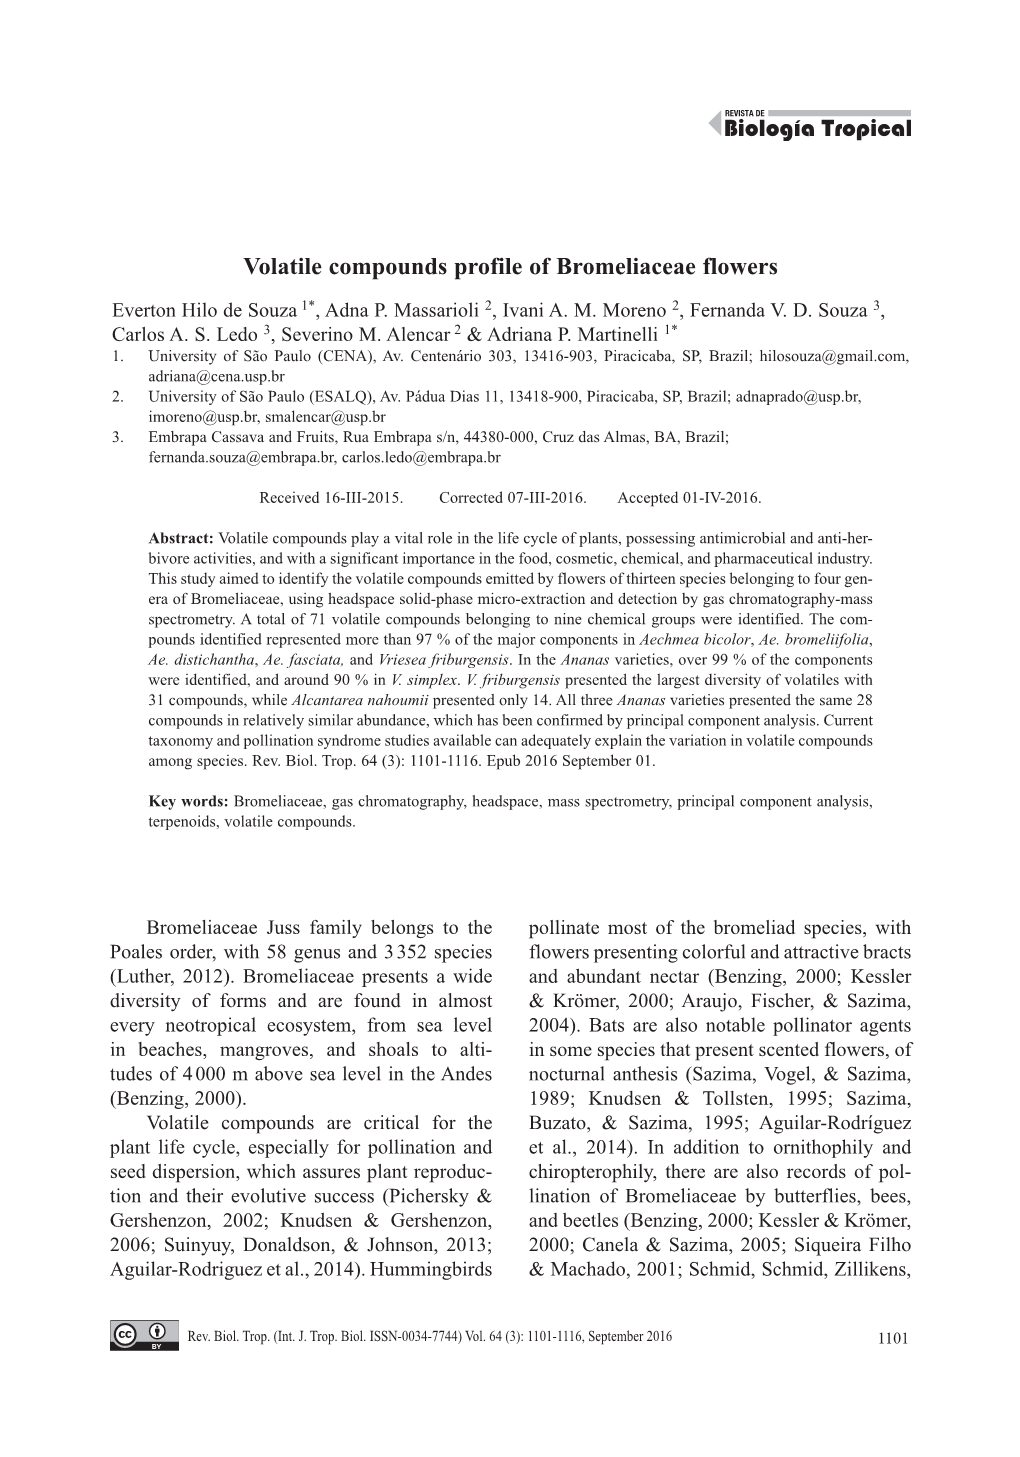 Volatile Compounds Profile of Bromeliaceae Flowers